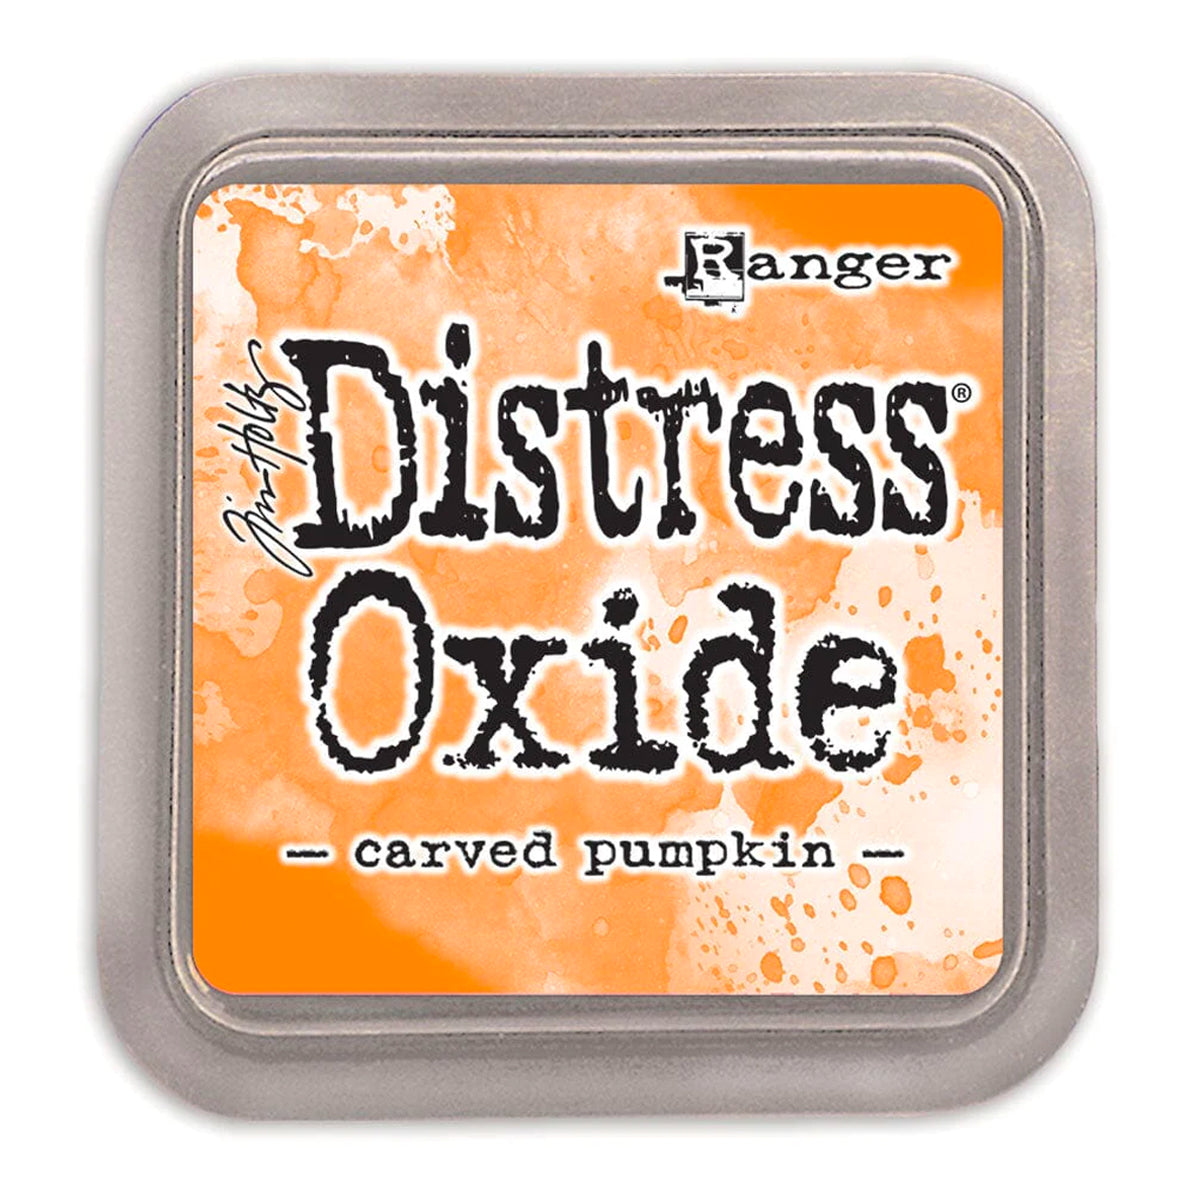 Tim Holtz Distress Oxide Ink Pad - Carved Pumpkin